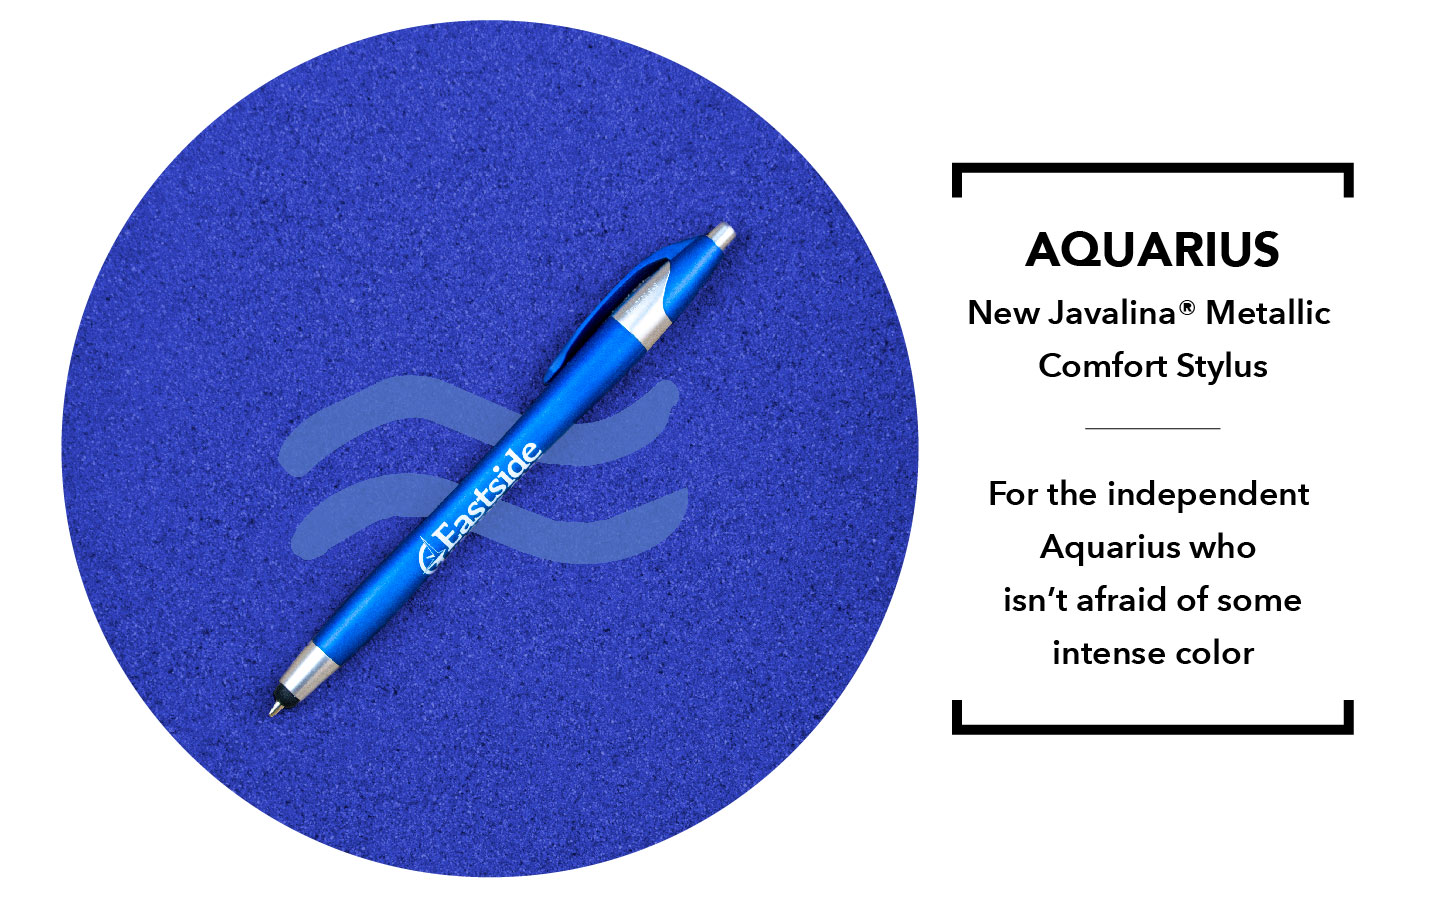 Aquarius January 20 - February 18